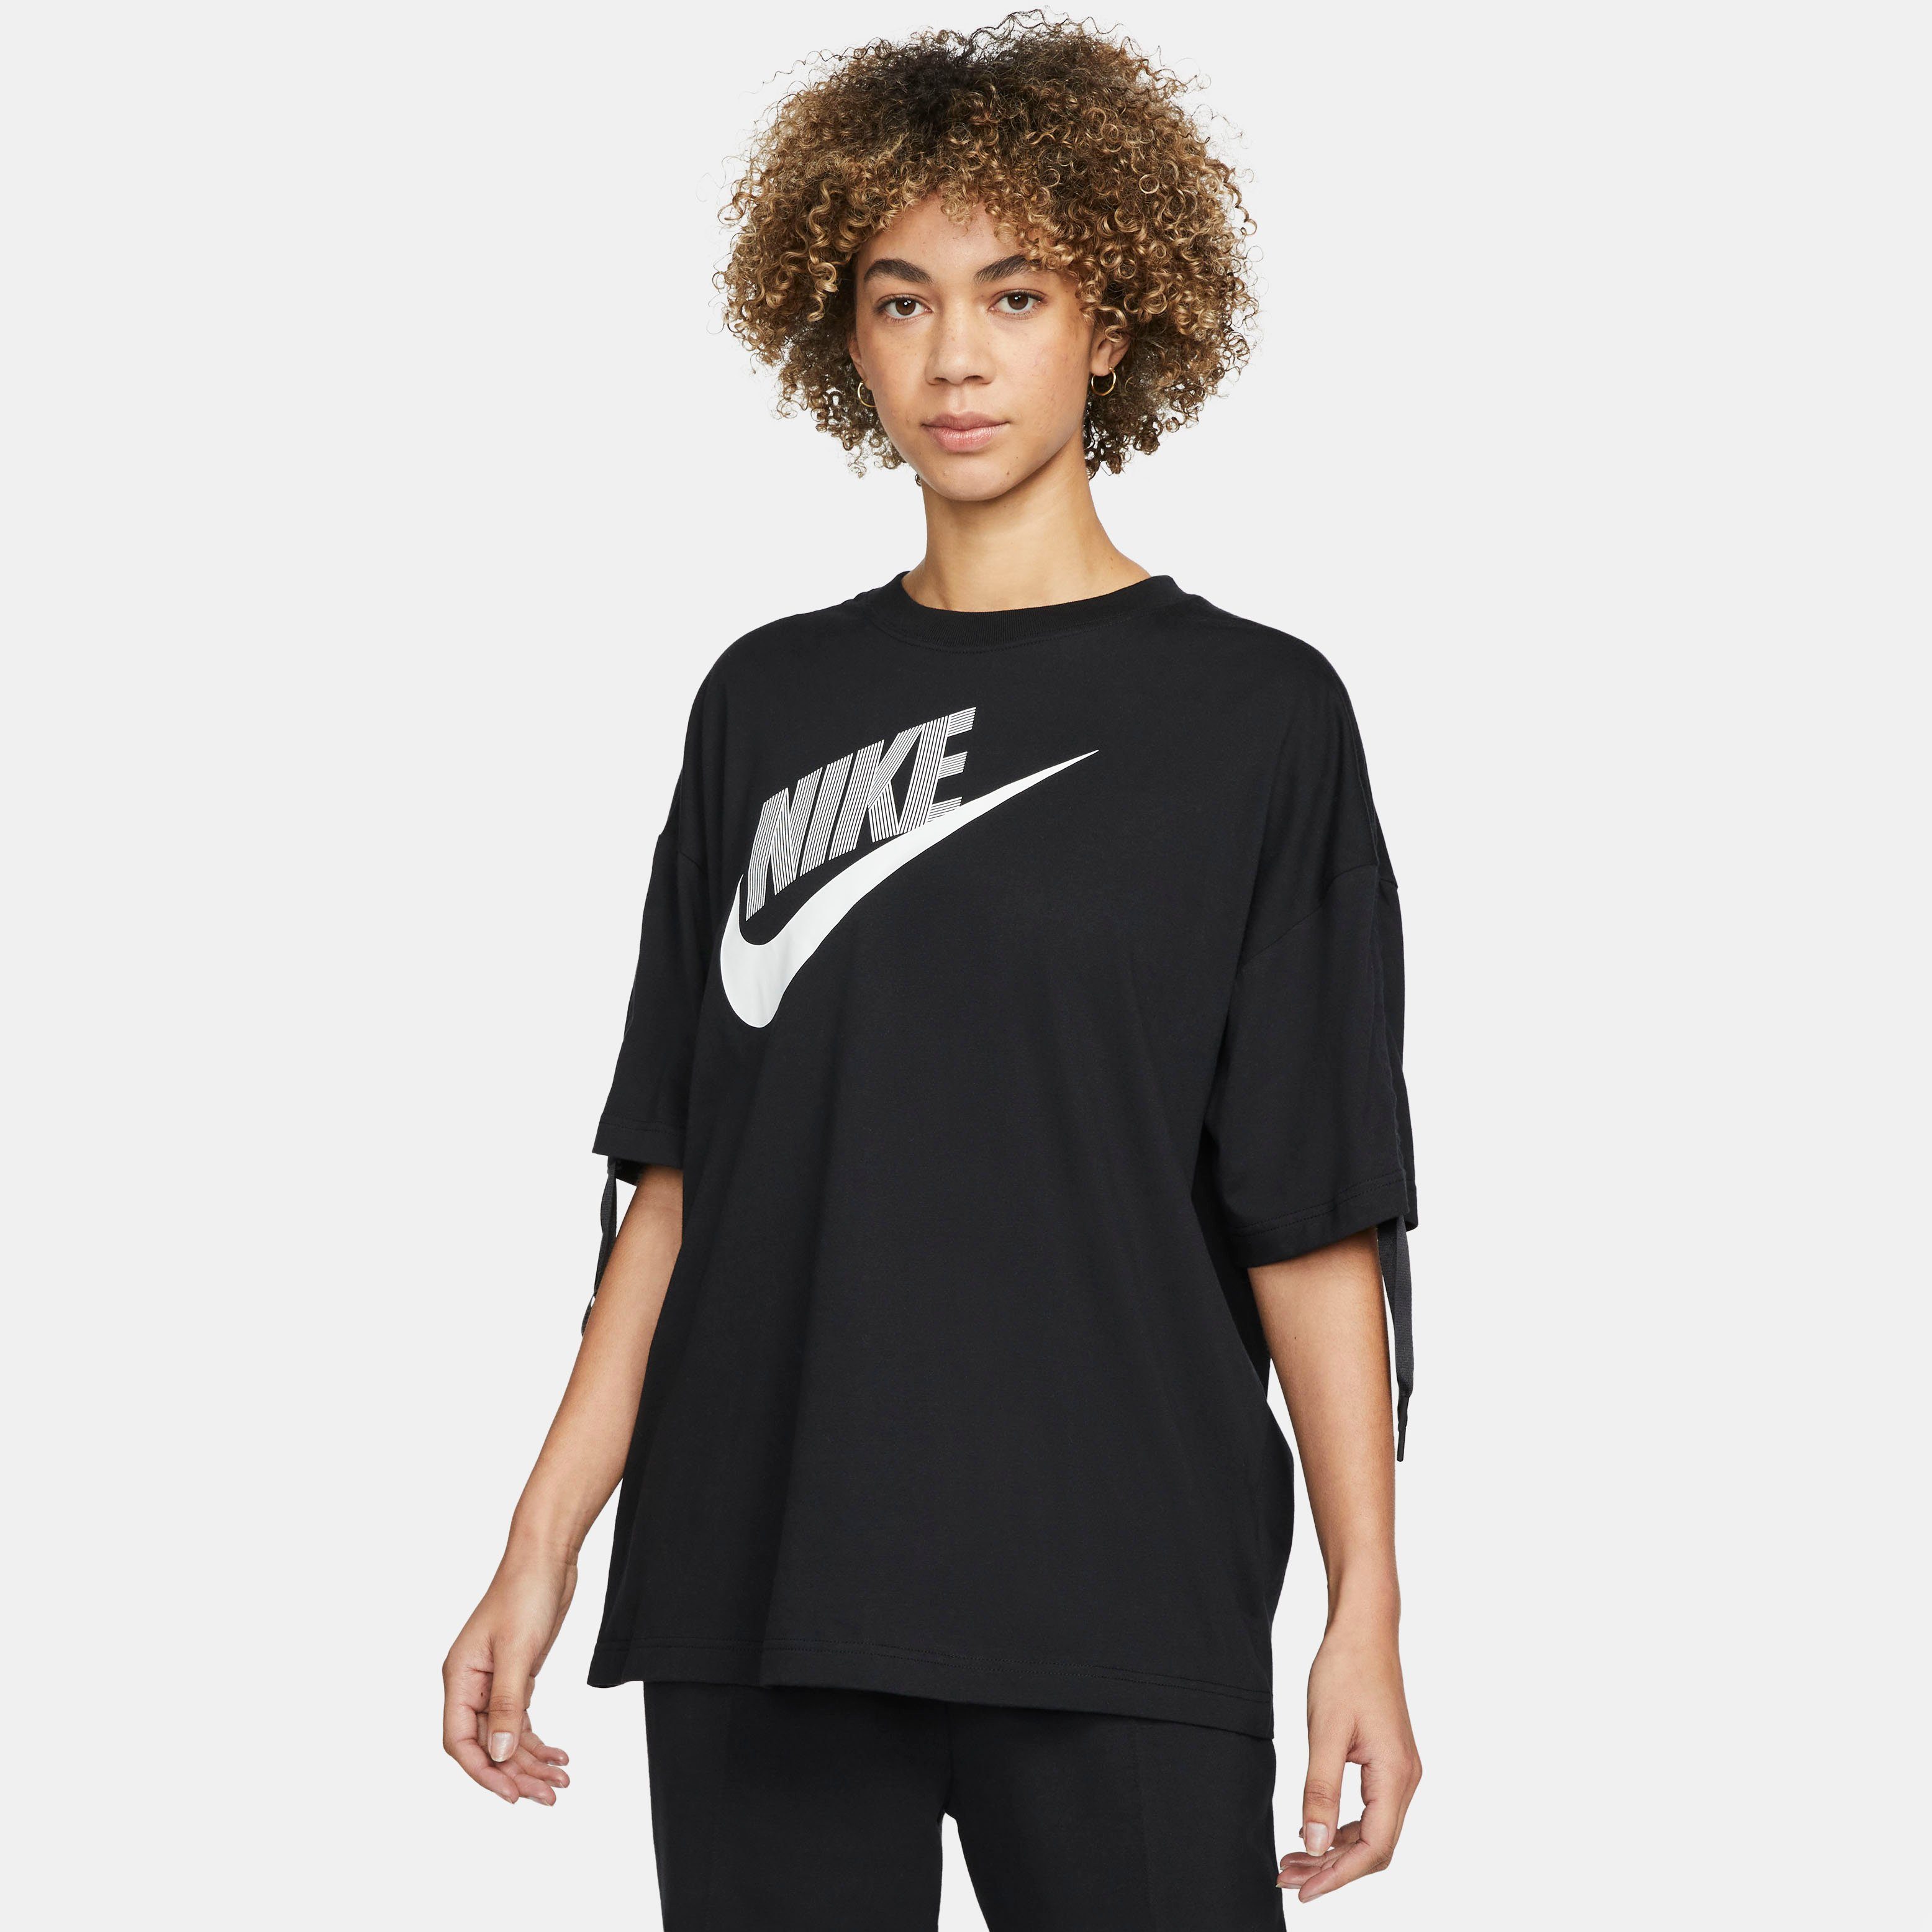 DNC TOP T-Shirt SS Sportswear BLACK NSW Nike W